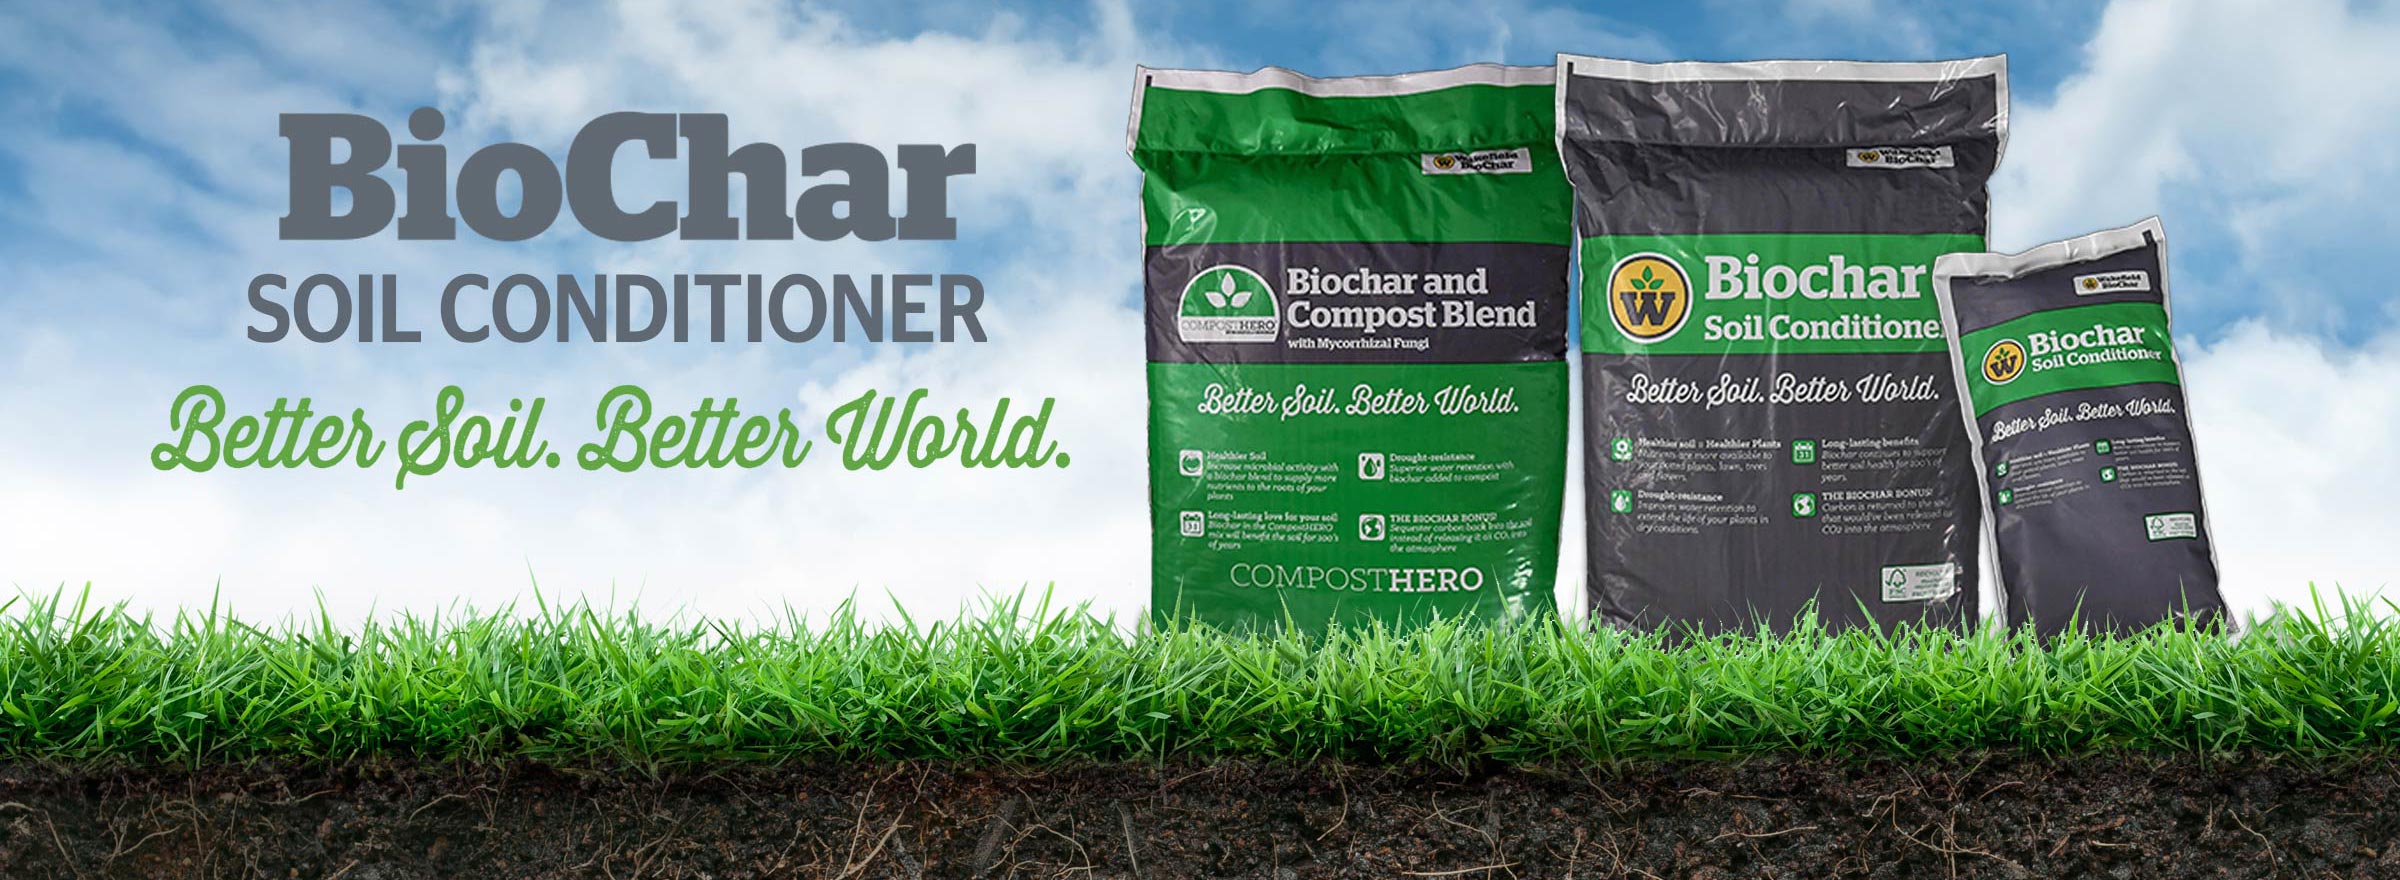 Wakefield BioChar - Better Soil. Better World.